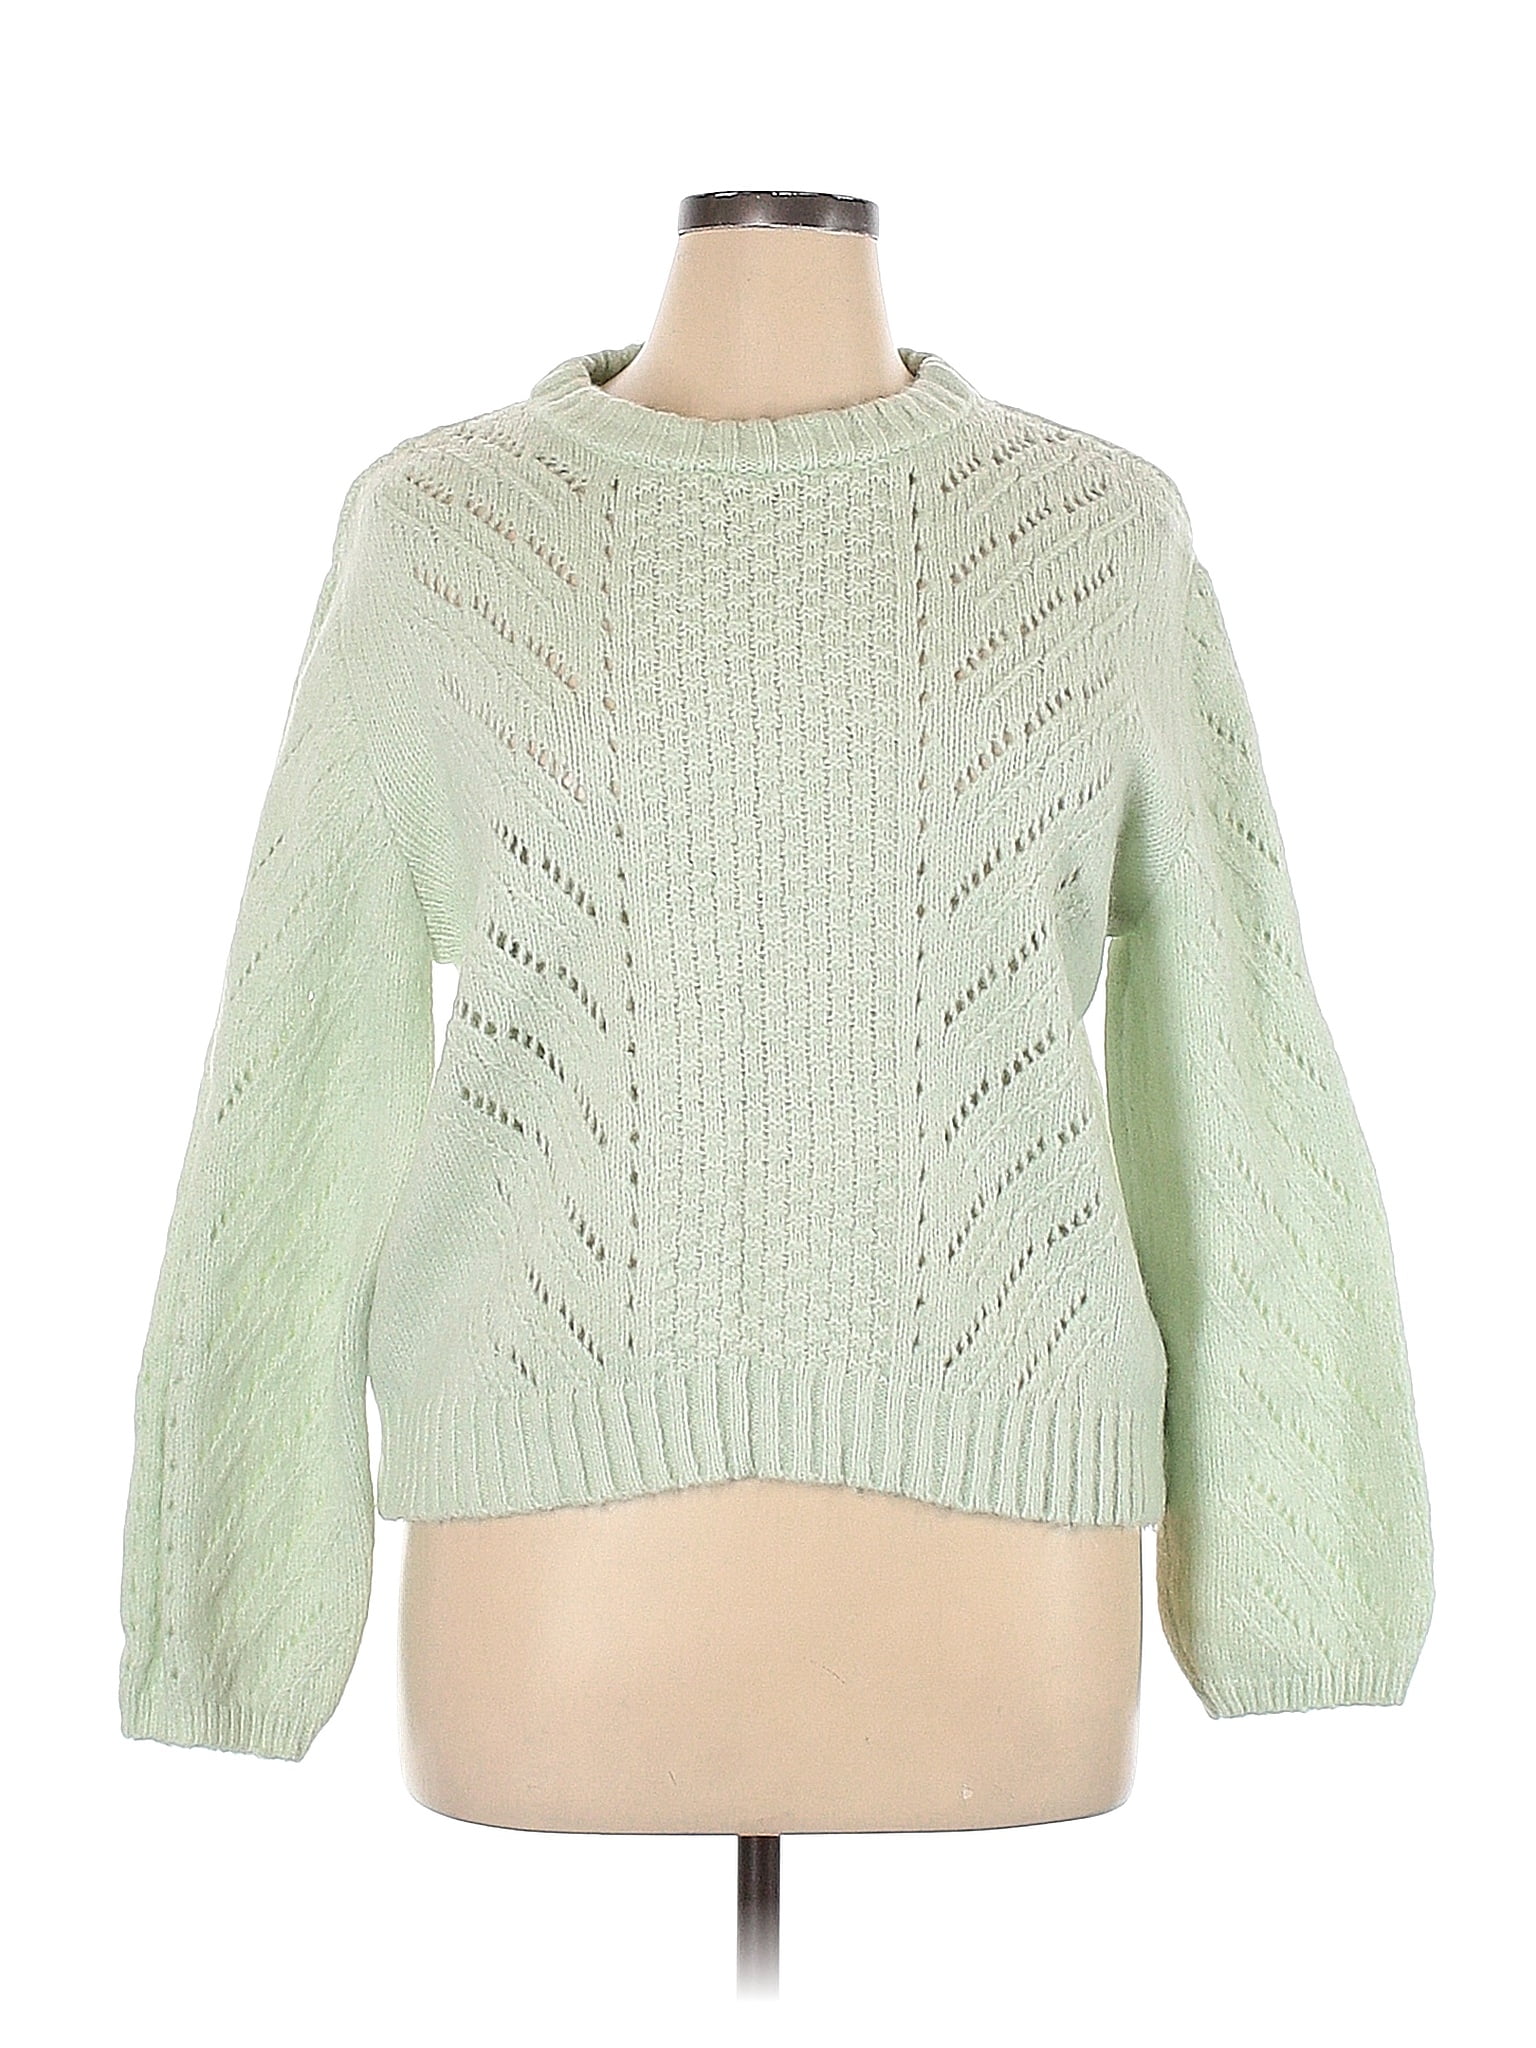 Elodie Green Pullover Sweater Size XL - 60% off | ThredUp